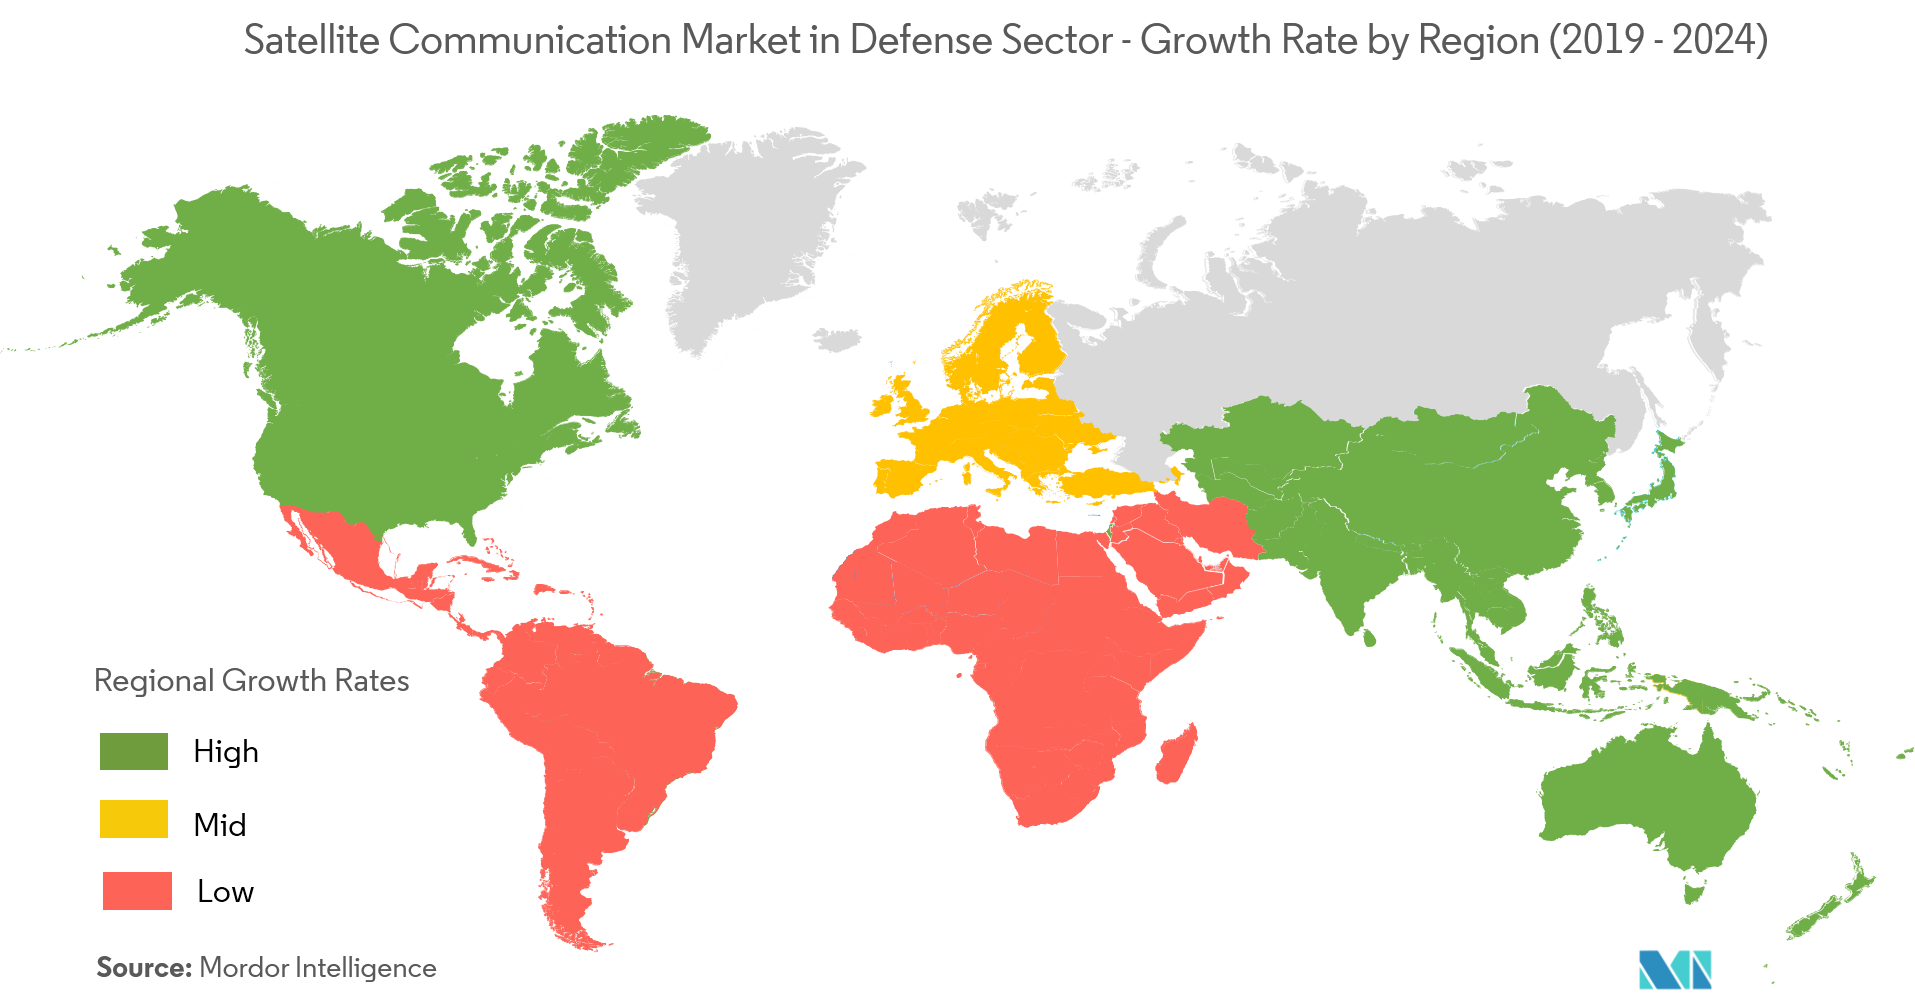  Satellite Communication Market Growth by Region